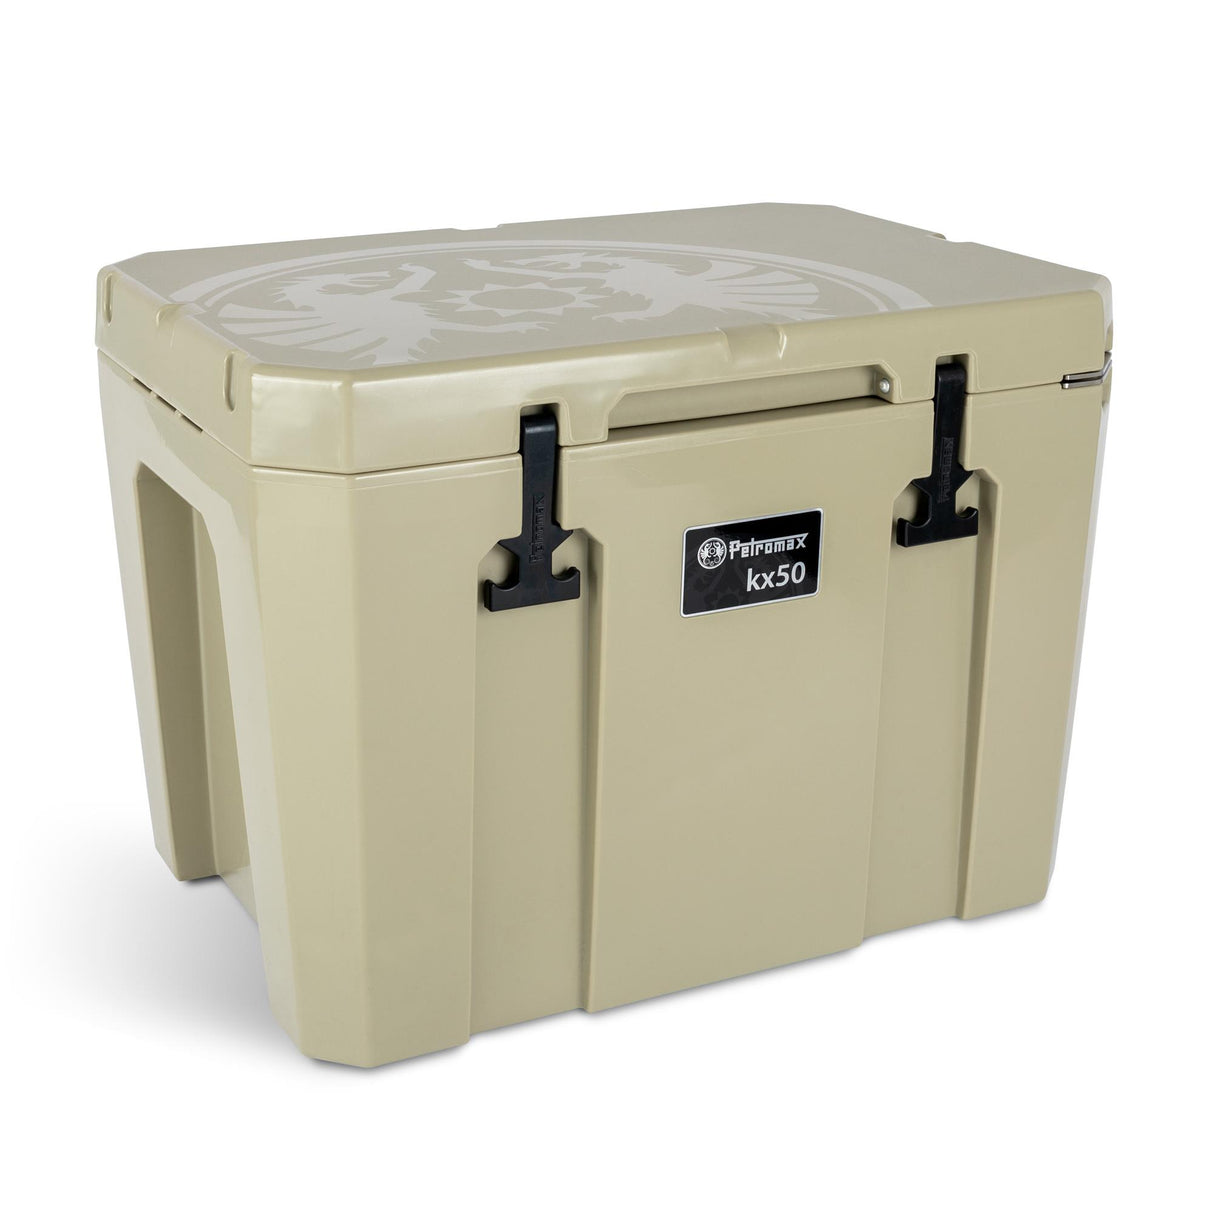 Cooler box 50 liters